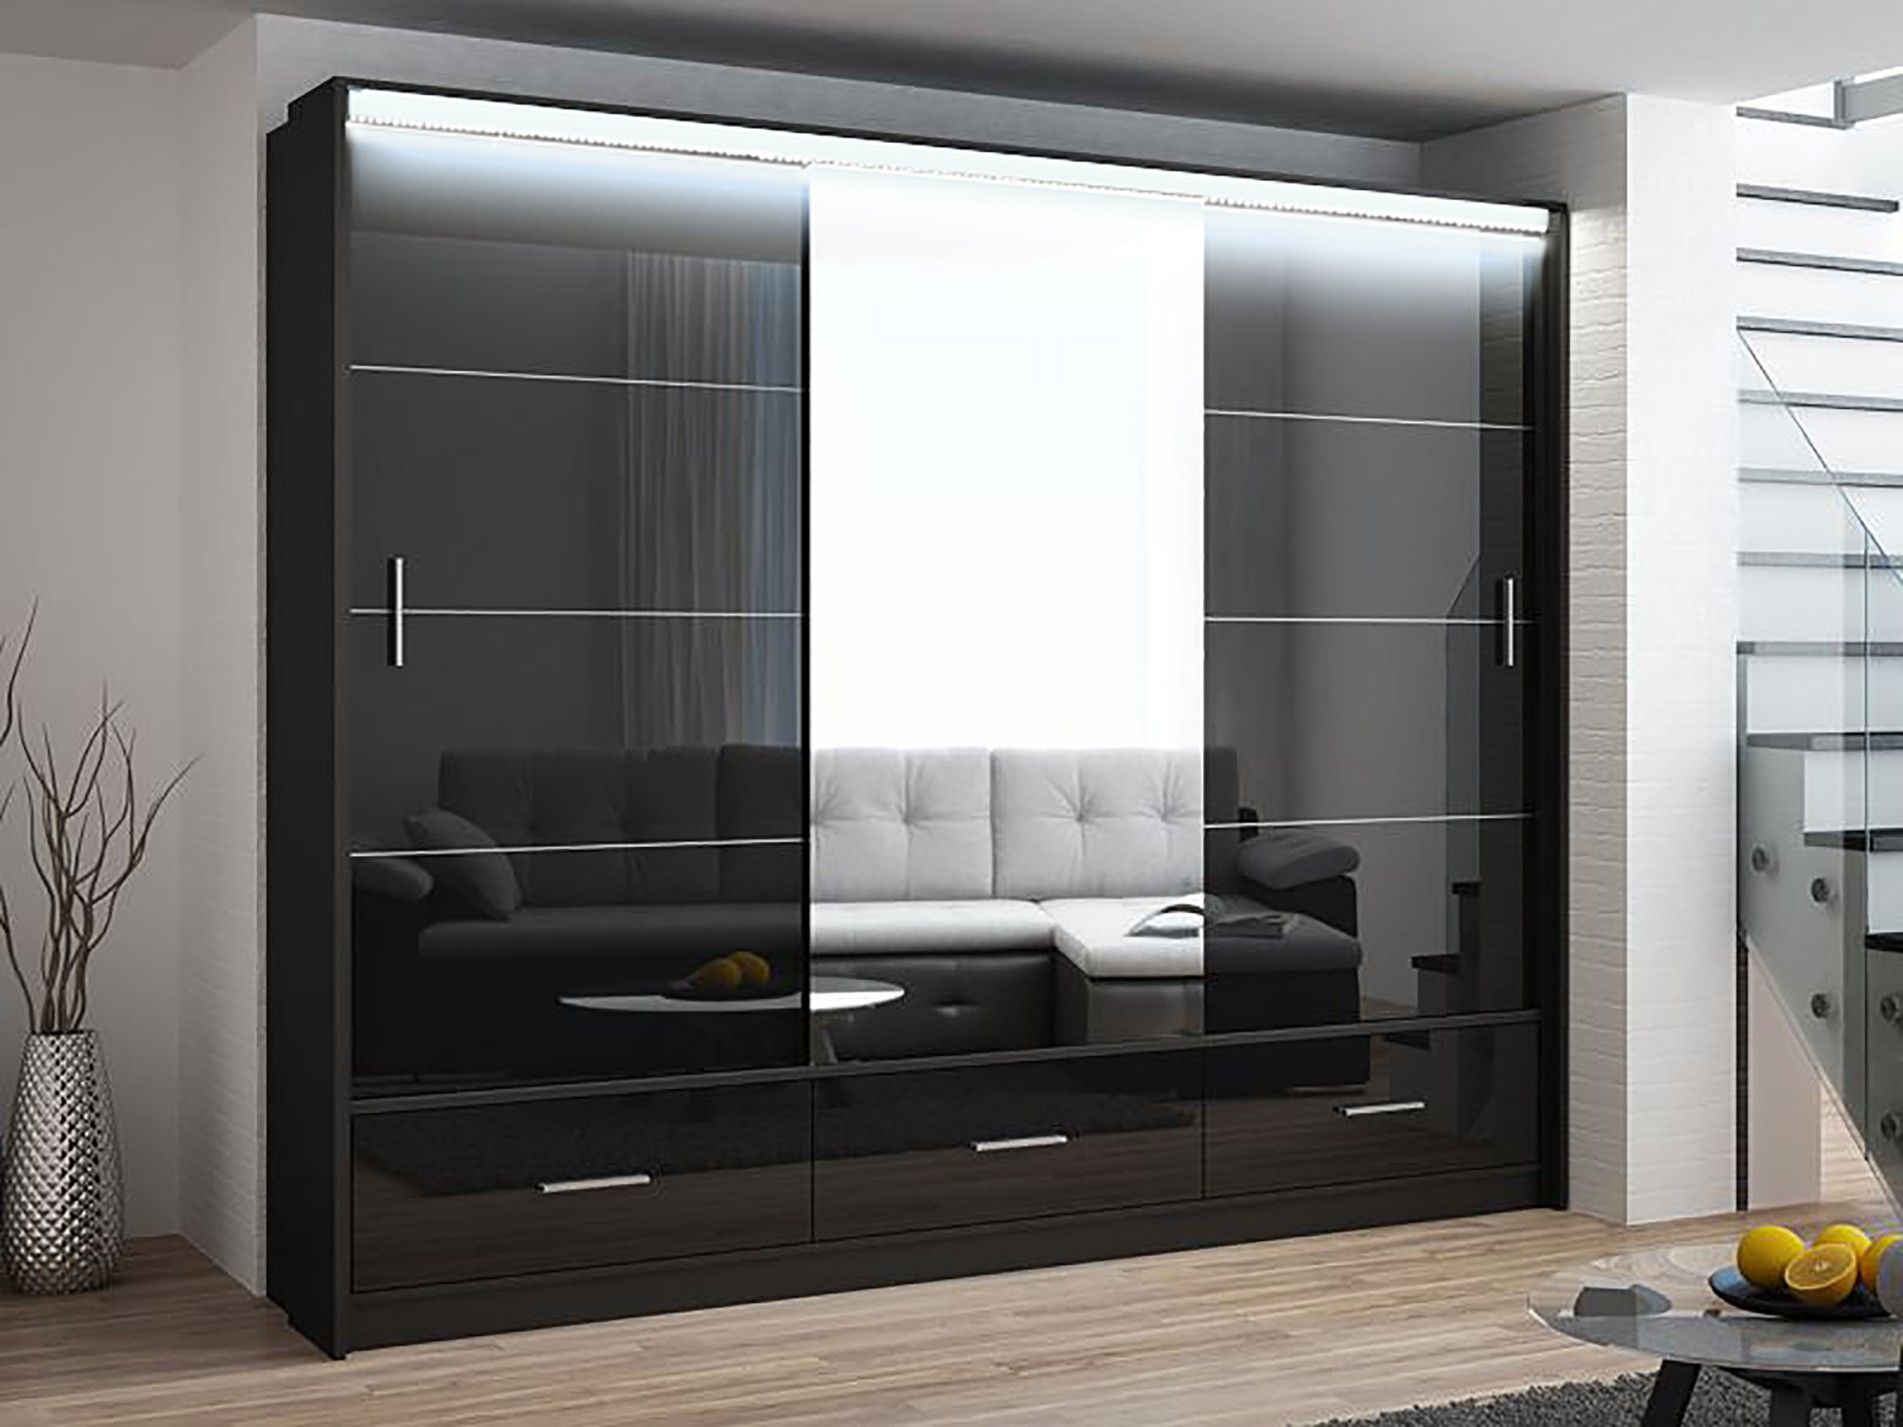 Marsylia Wardrobe, Black Gloss + Mirror 255cm ,hull Furniture Pertaining To Black Gloss Wardrobes (View 12 of 15)